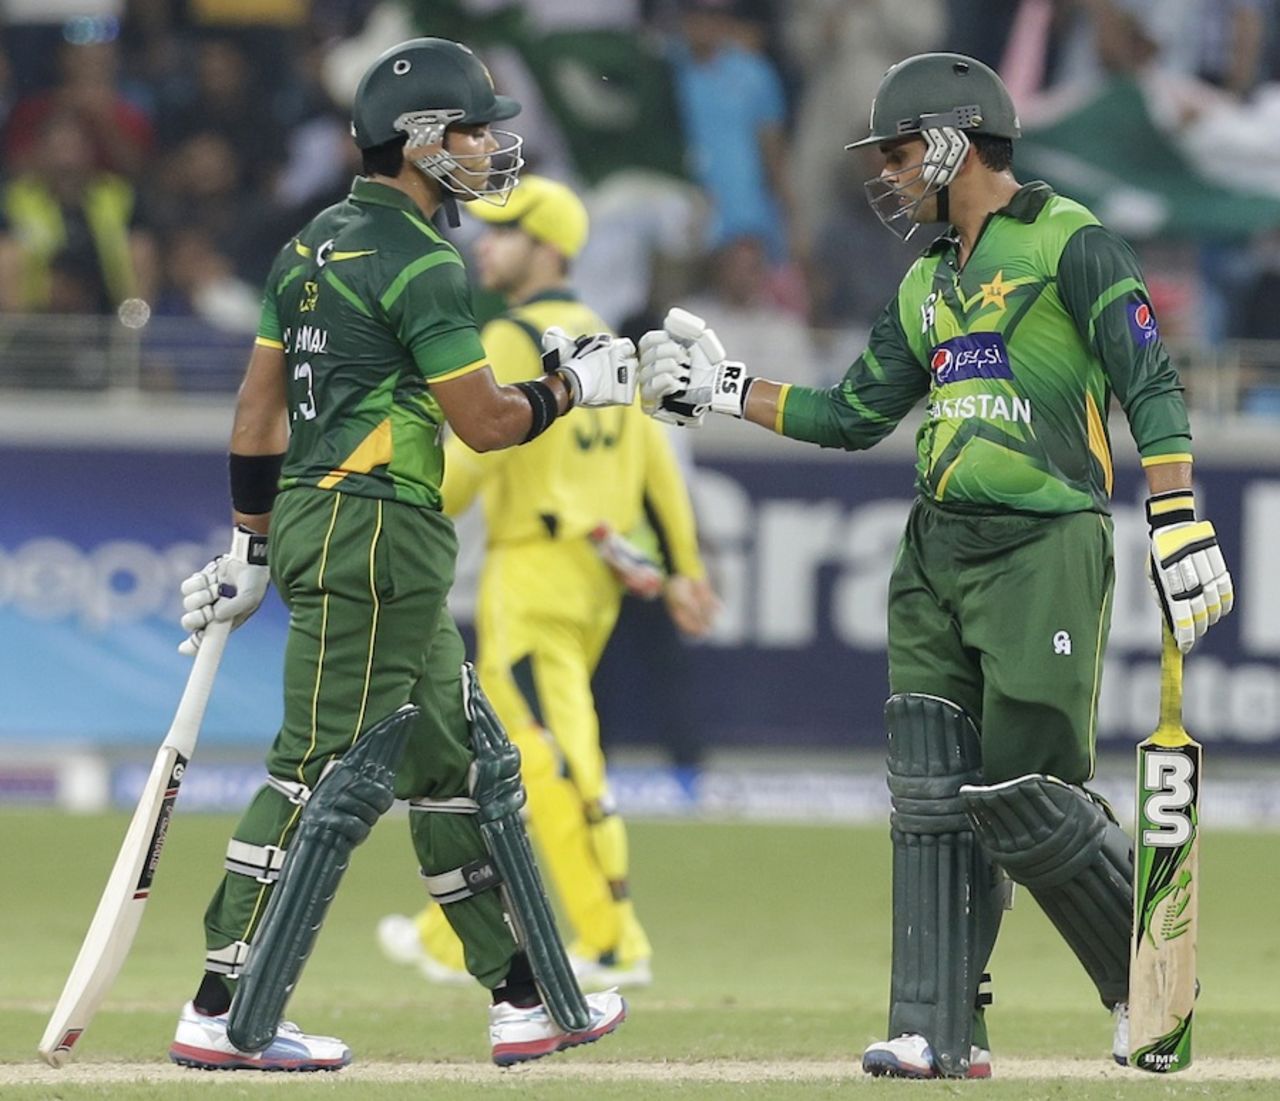 Umar Akmal and Kamran Akmal partnership provided the late boost, Pakistan v Australia, 2nd T20I, Dubai, September 7, 2012